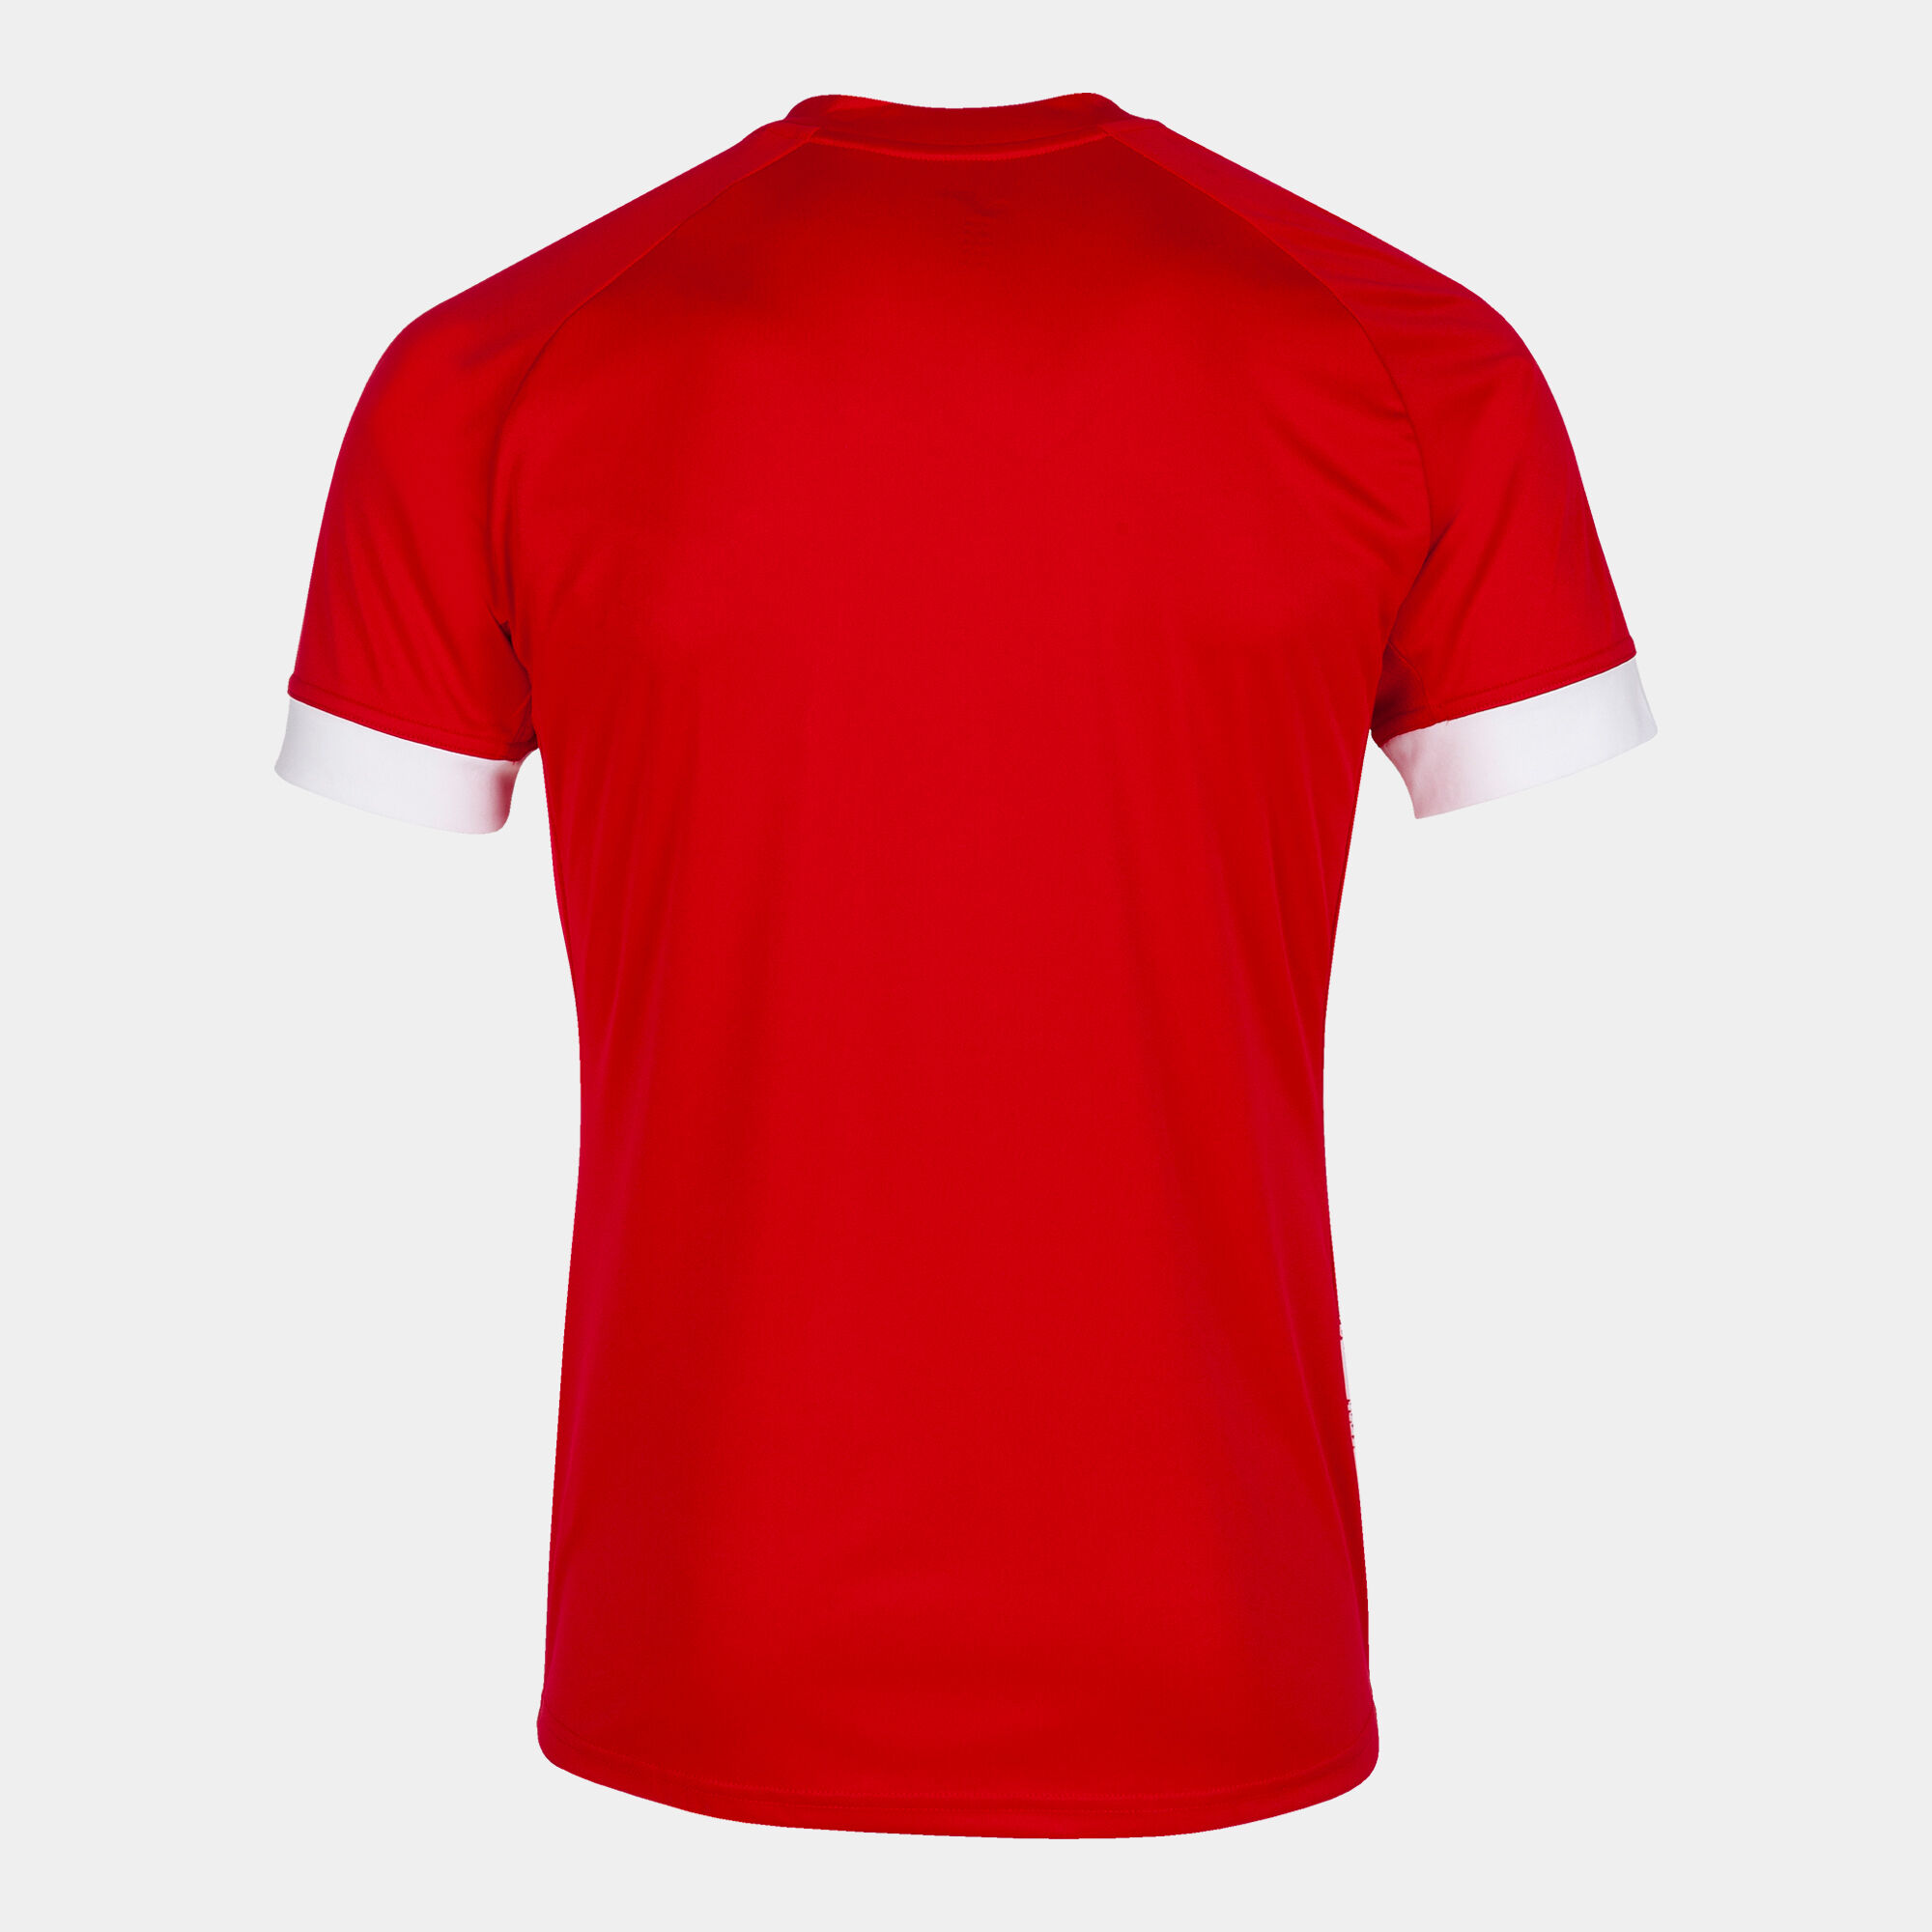 Camiseta manga corta hombre Supernova III rojo blanco